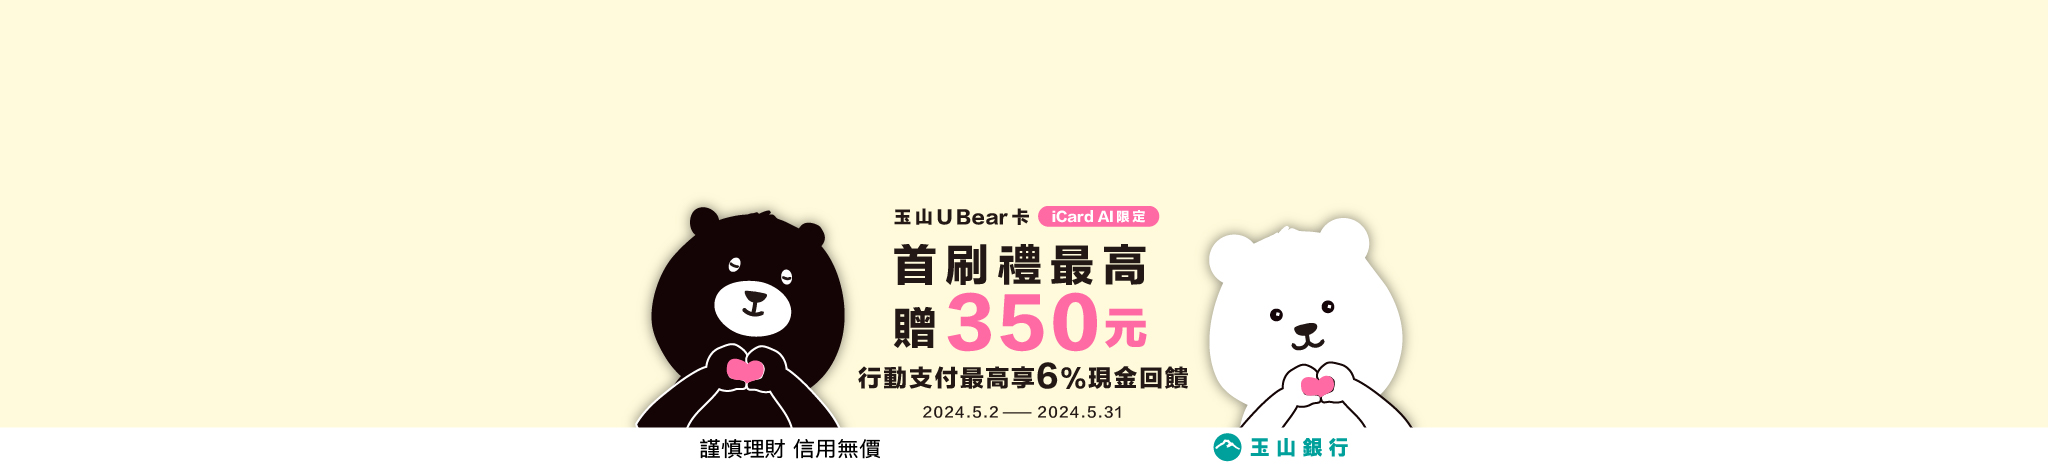 玉山U bear 0630 (首頁大banner)